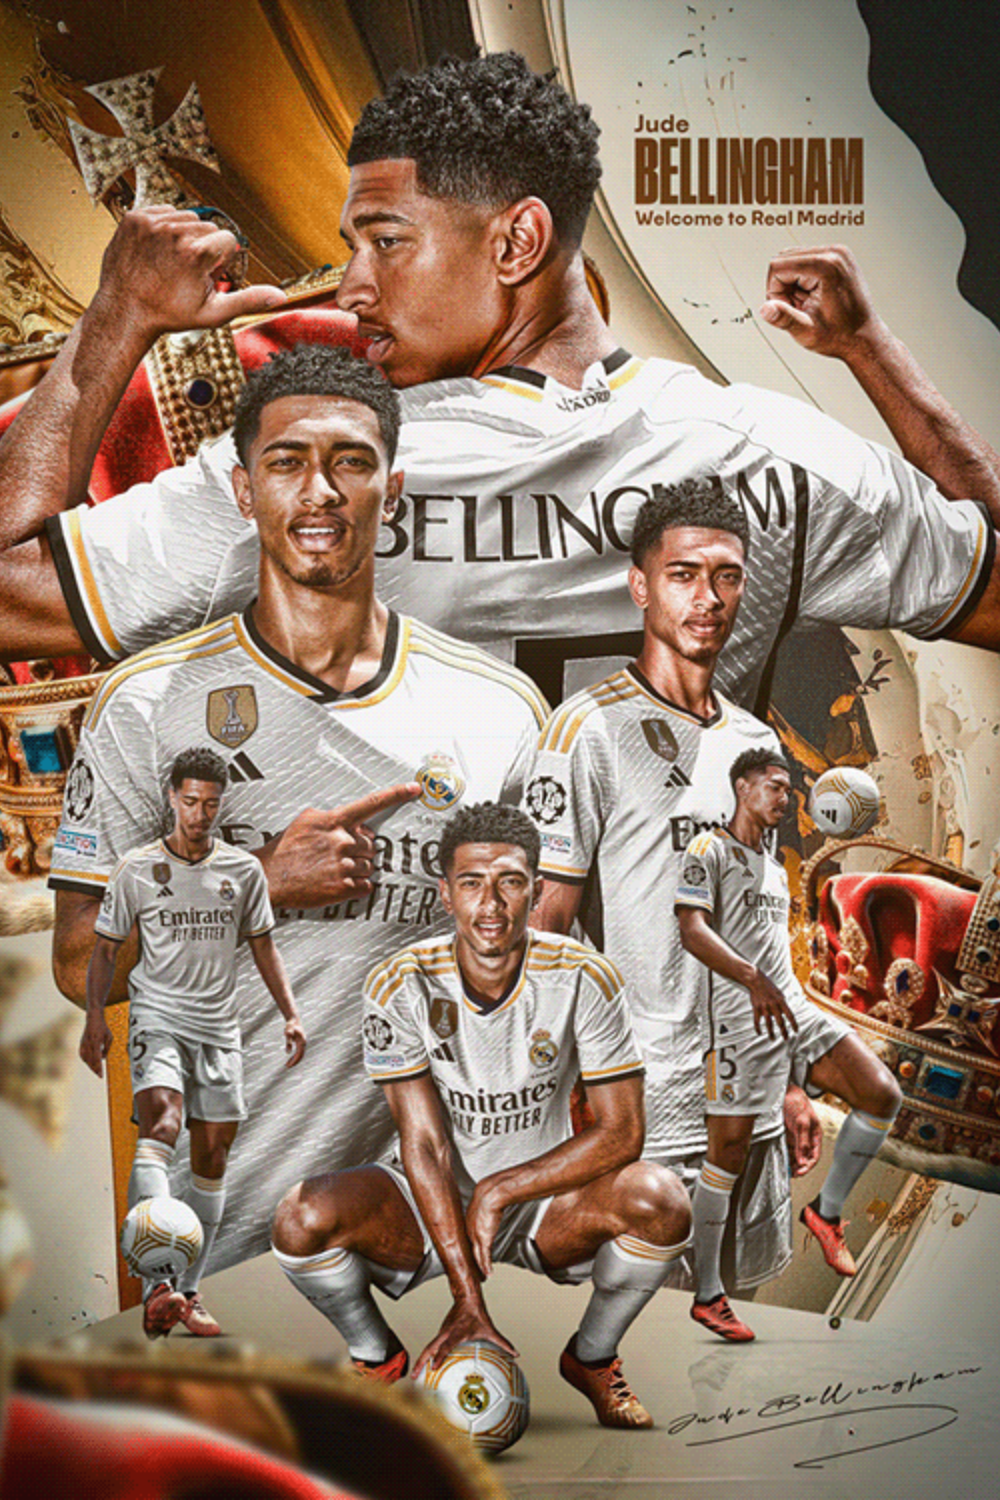 Wallpapers 4k Real Madrid - Jude Bellingham Real Madrid 4K Wallpapers Free Download